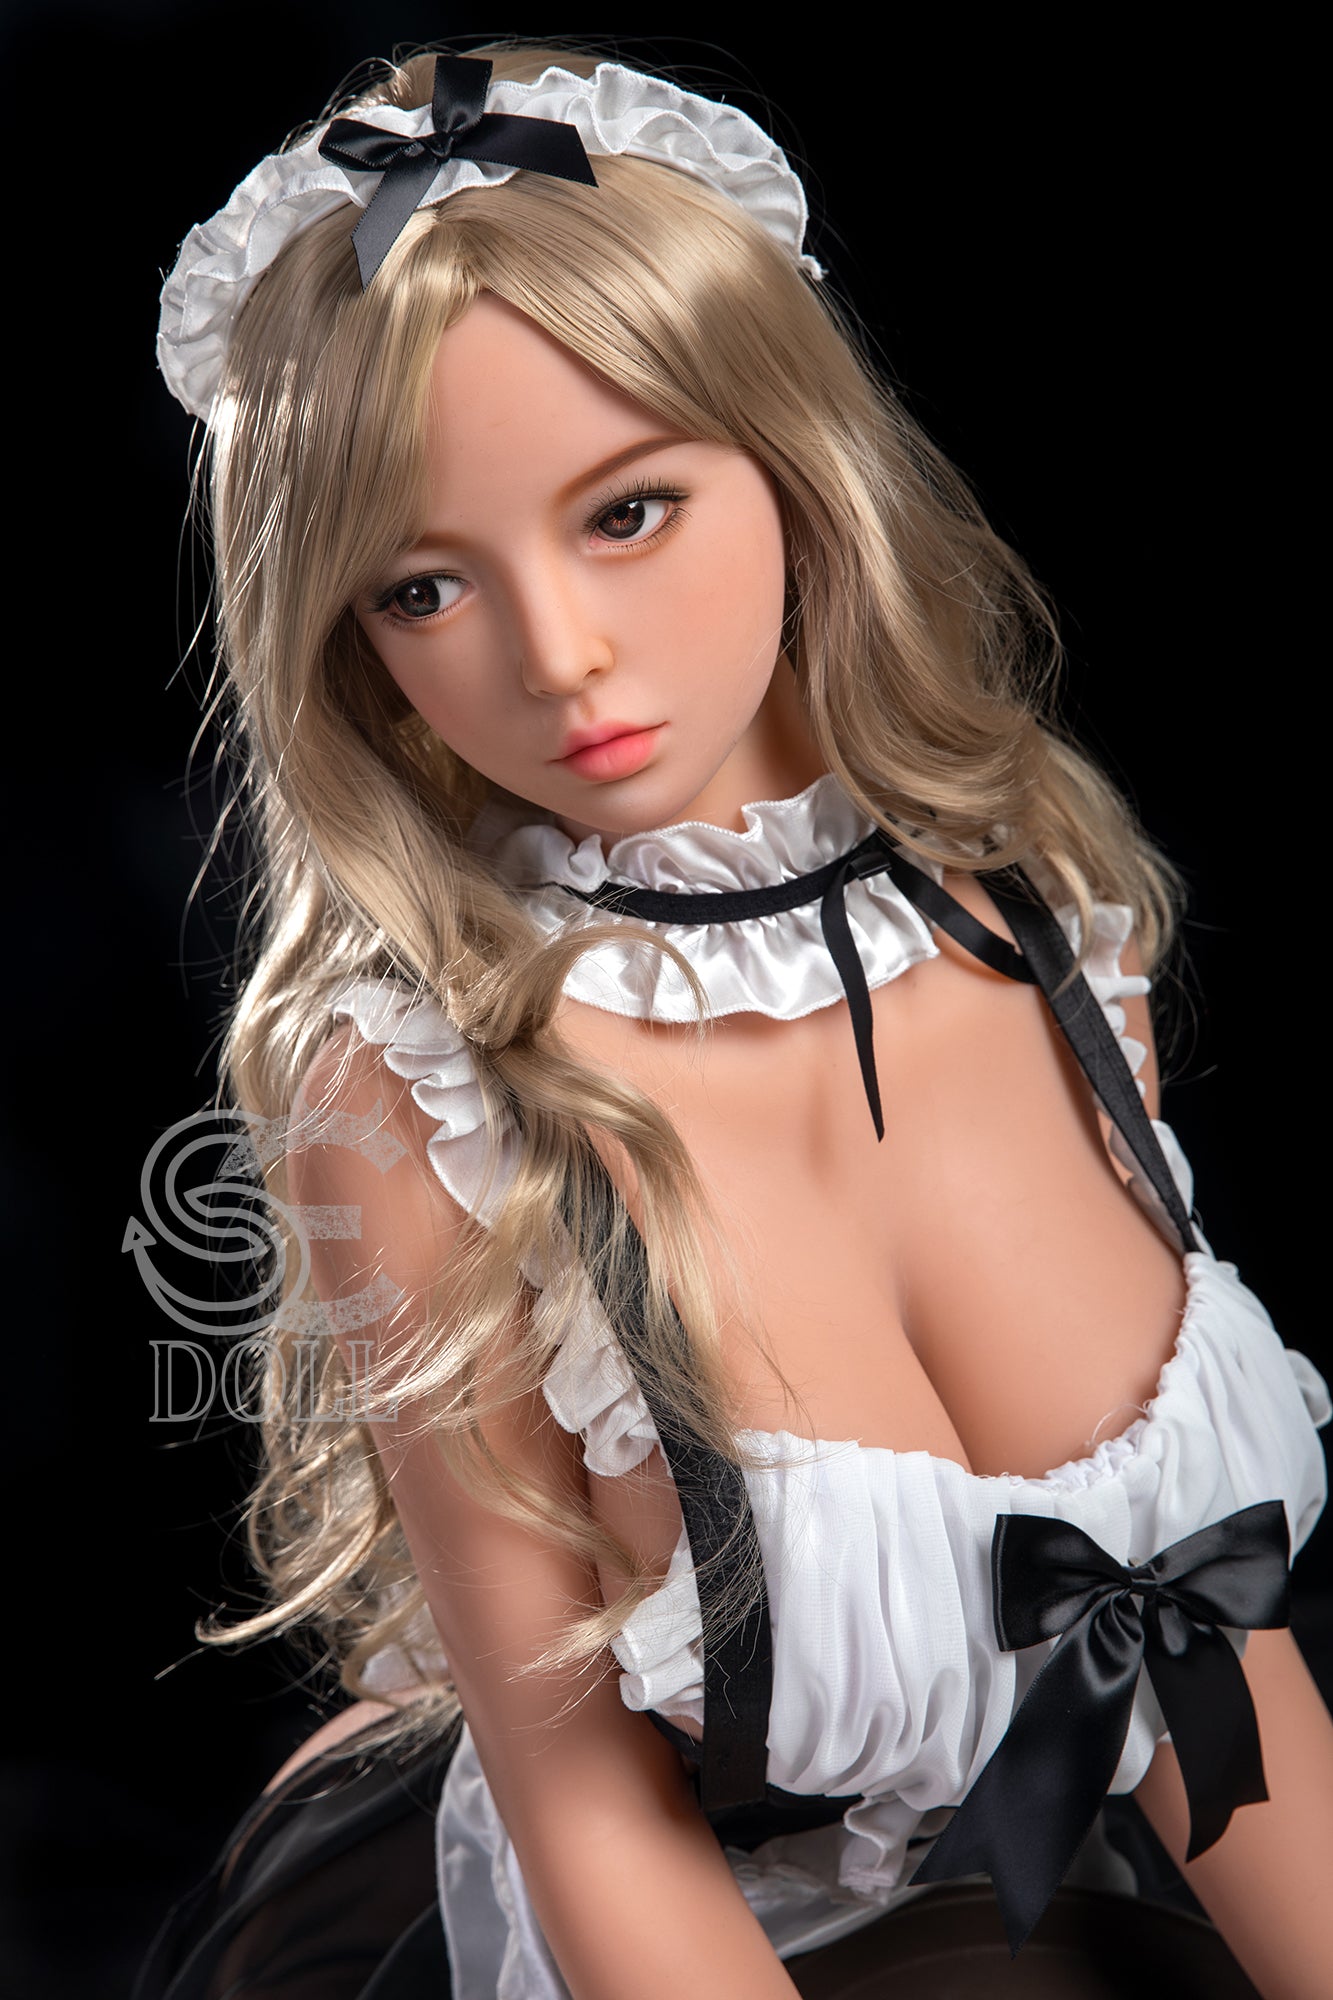 SEDOLL 161 cm F TPE - Summer | Buy Sex Dolls at DOLLS ACTUALLY